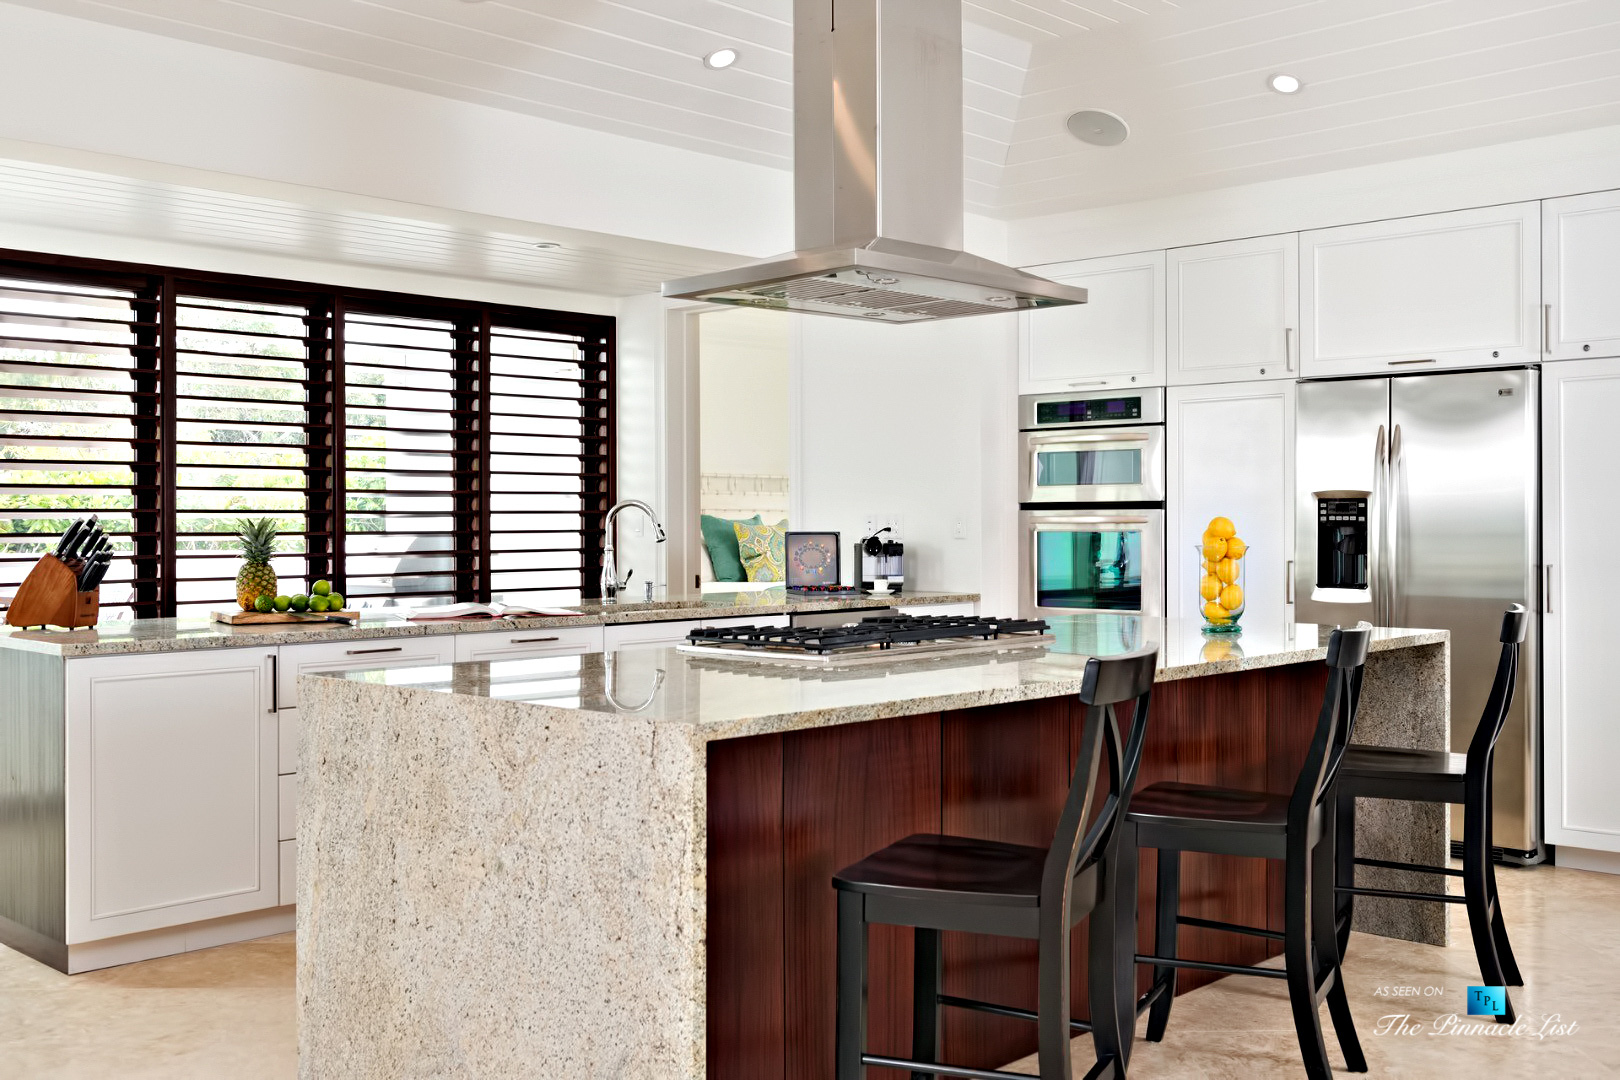 Villa Aquazure - Providenciales, Turks and Caicos Islands - Gourmet Kitchen - Luxury Real Estate - Beachfront Home